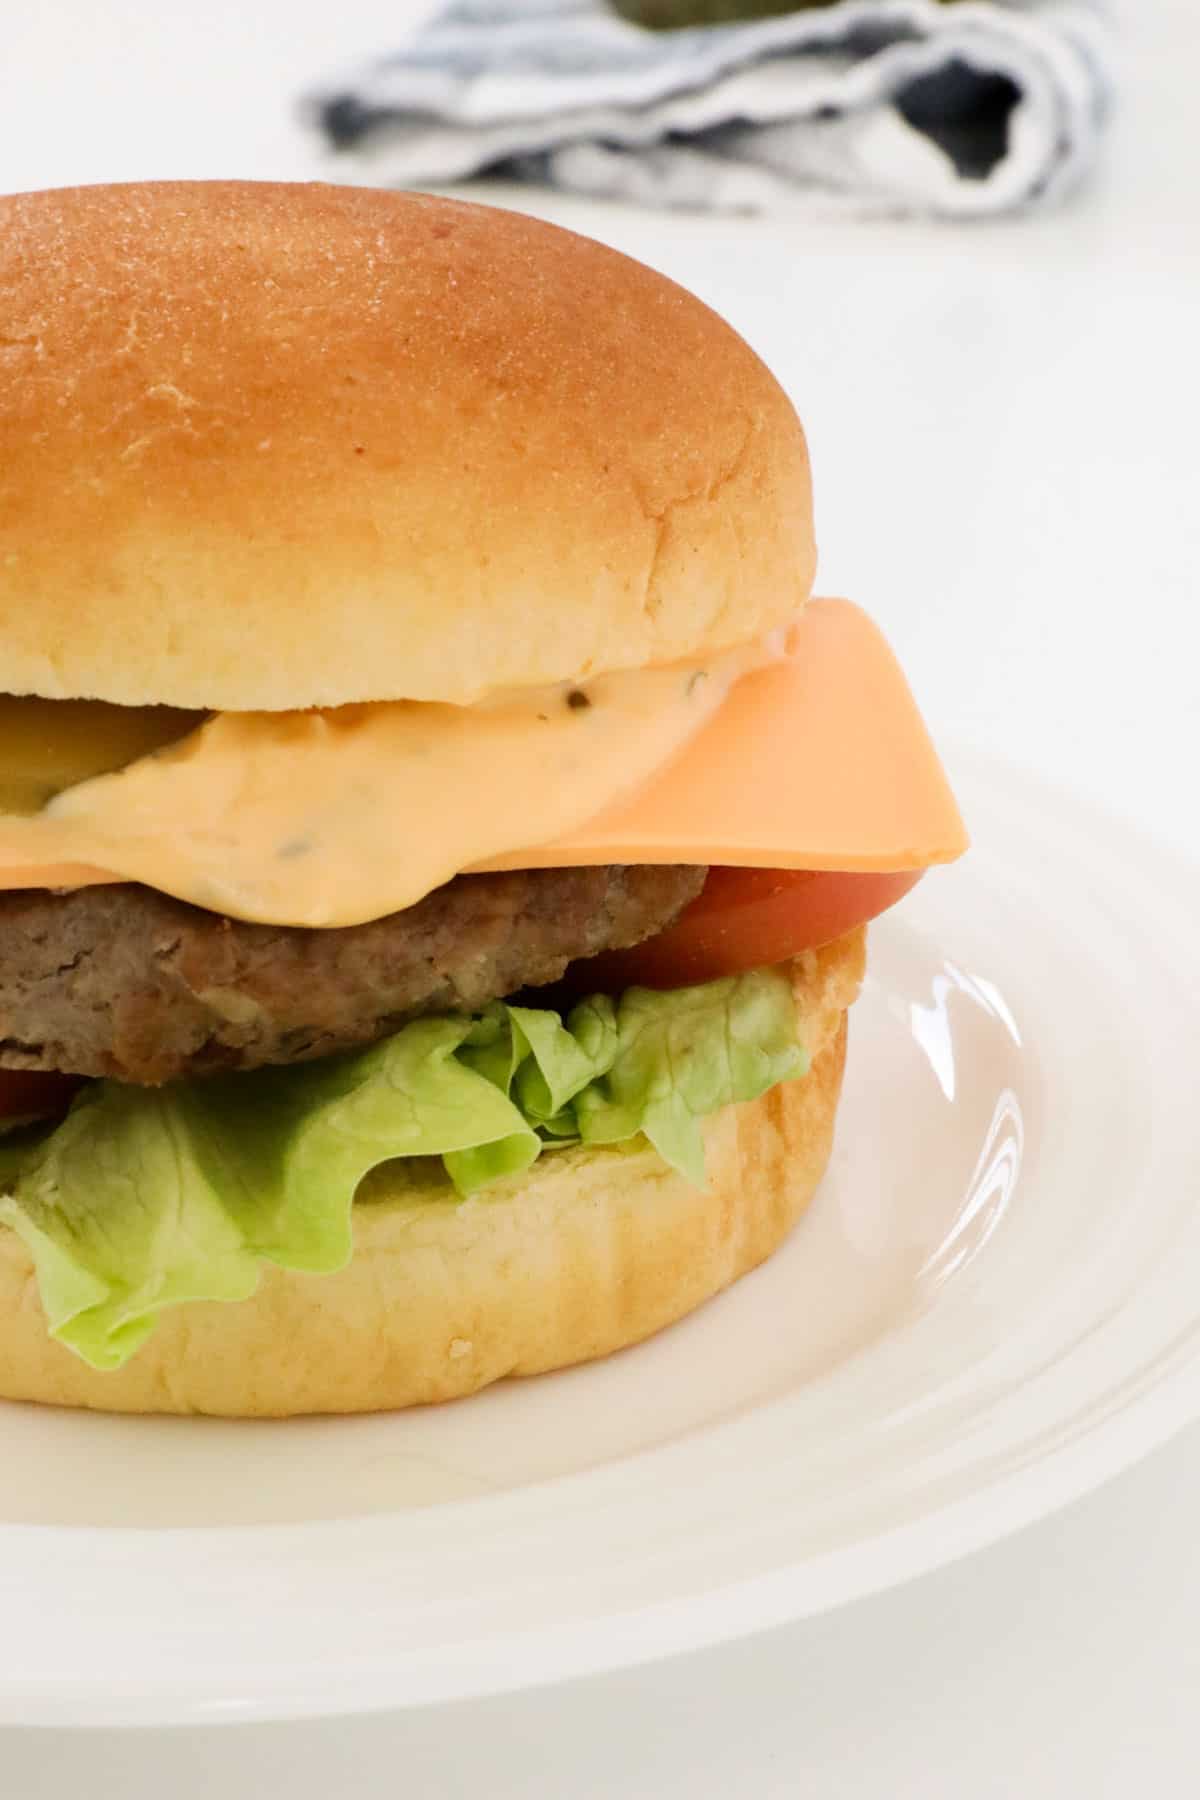 Lettuce, tomato, cheese and patty in a hamburger bun. 